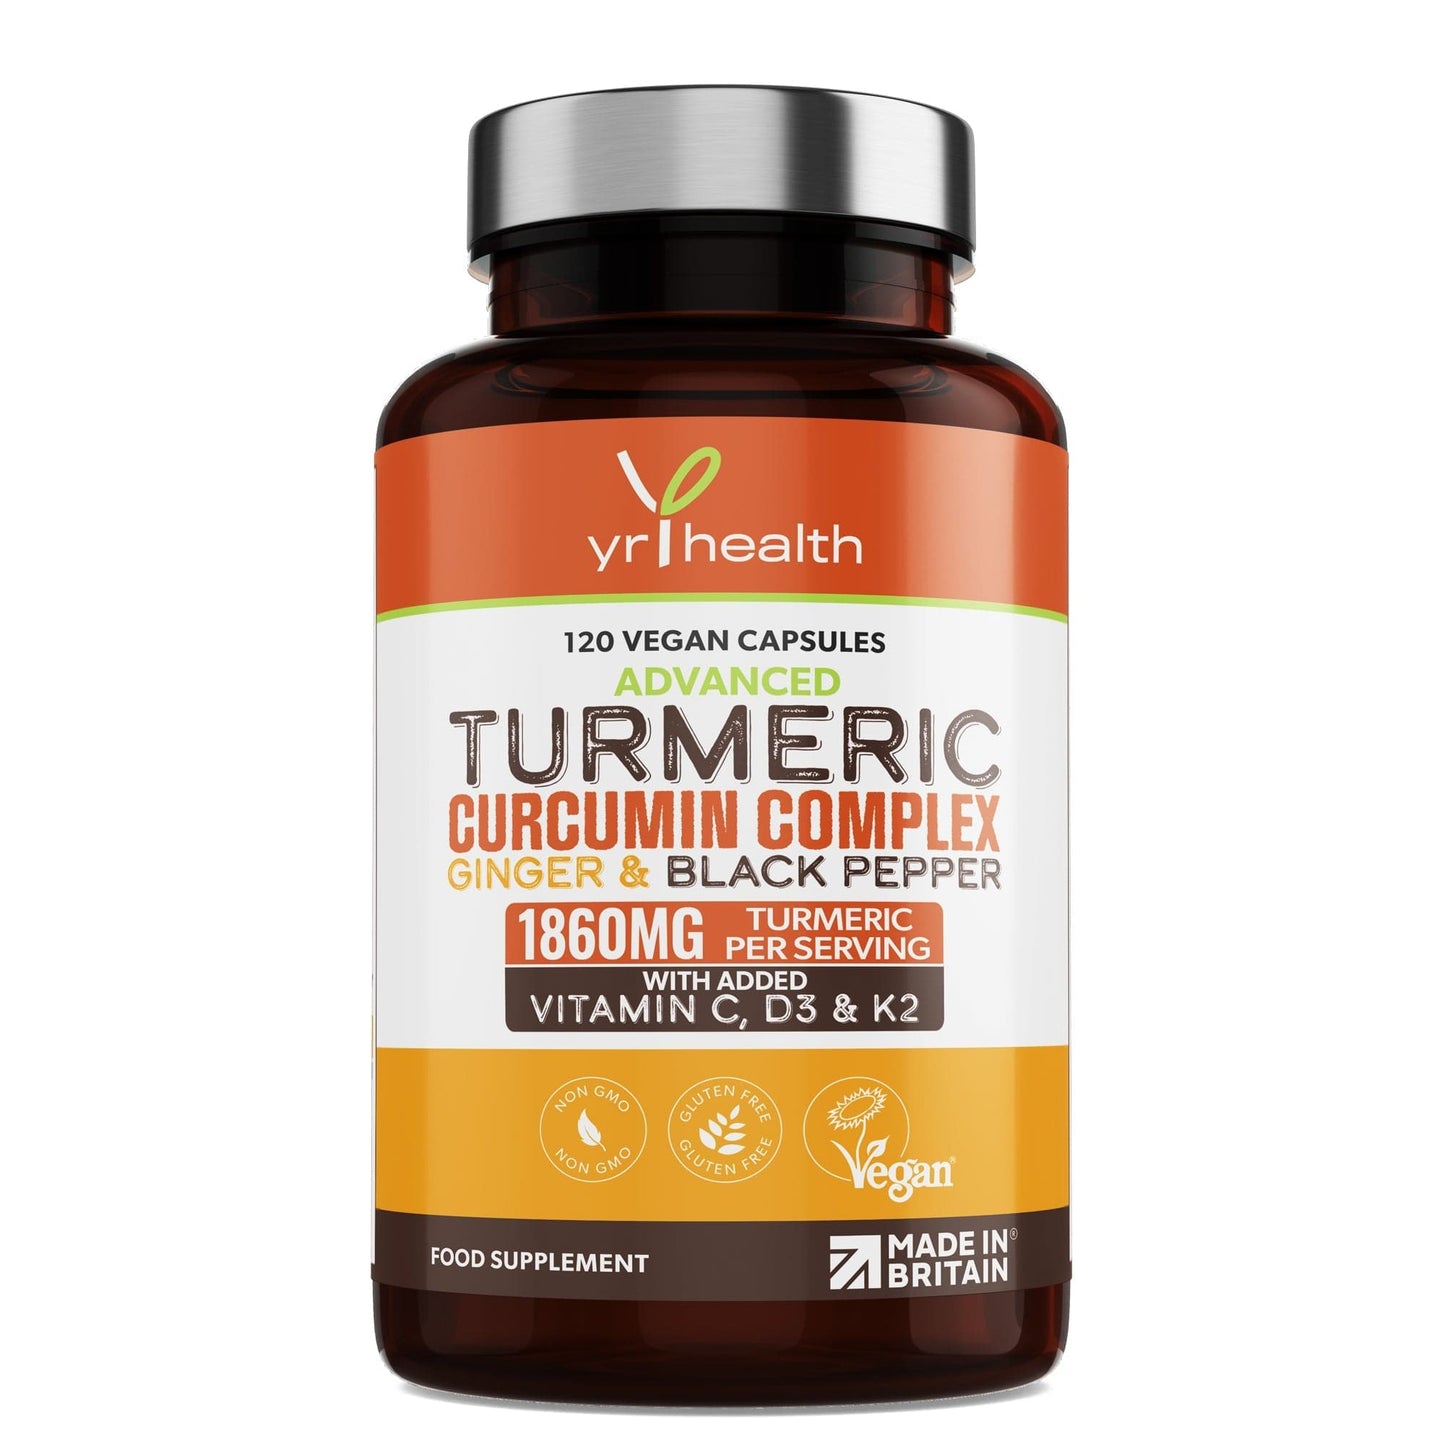 Turmeric Curcumin Complex Ginger & Black Pepper - 120 Vegan Tablets